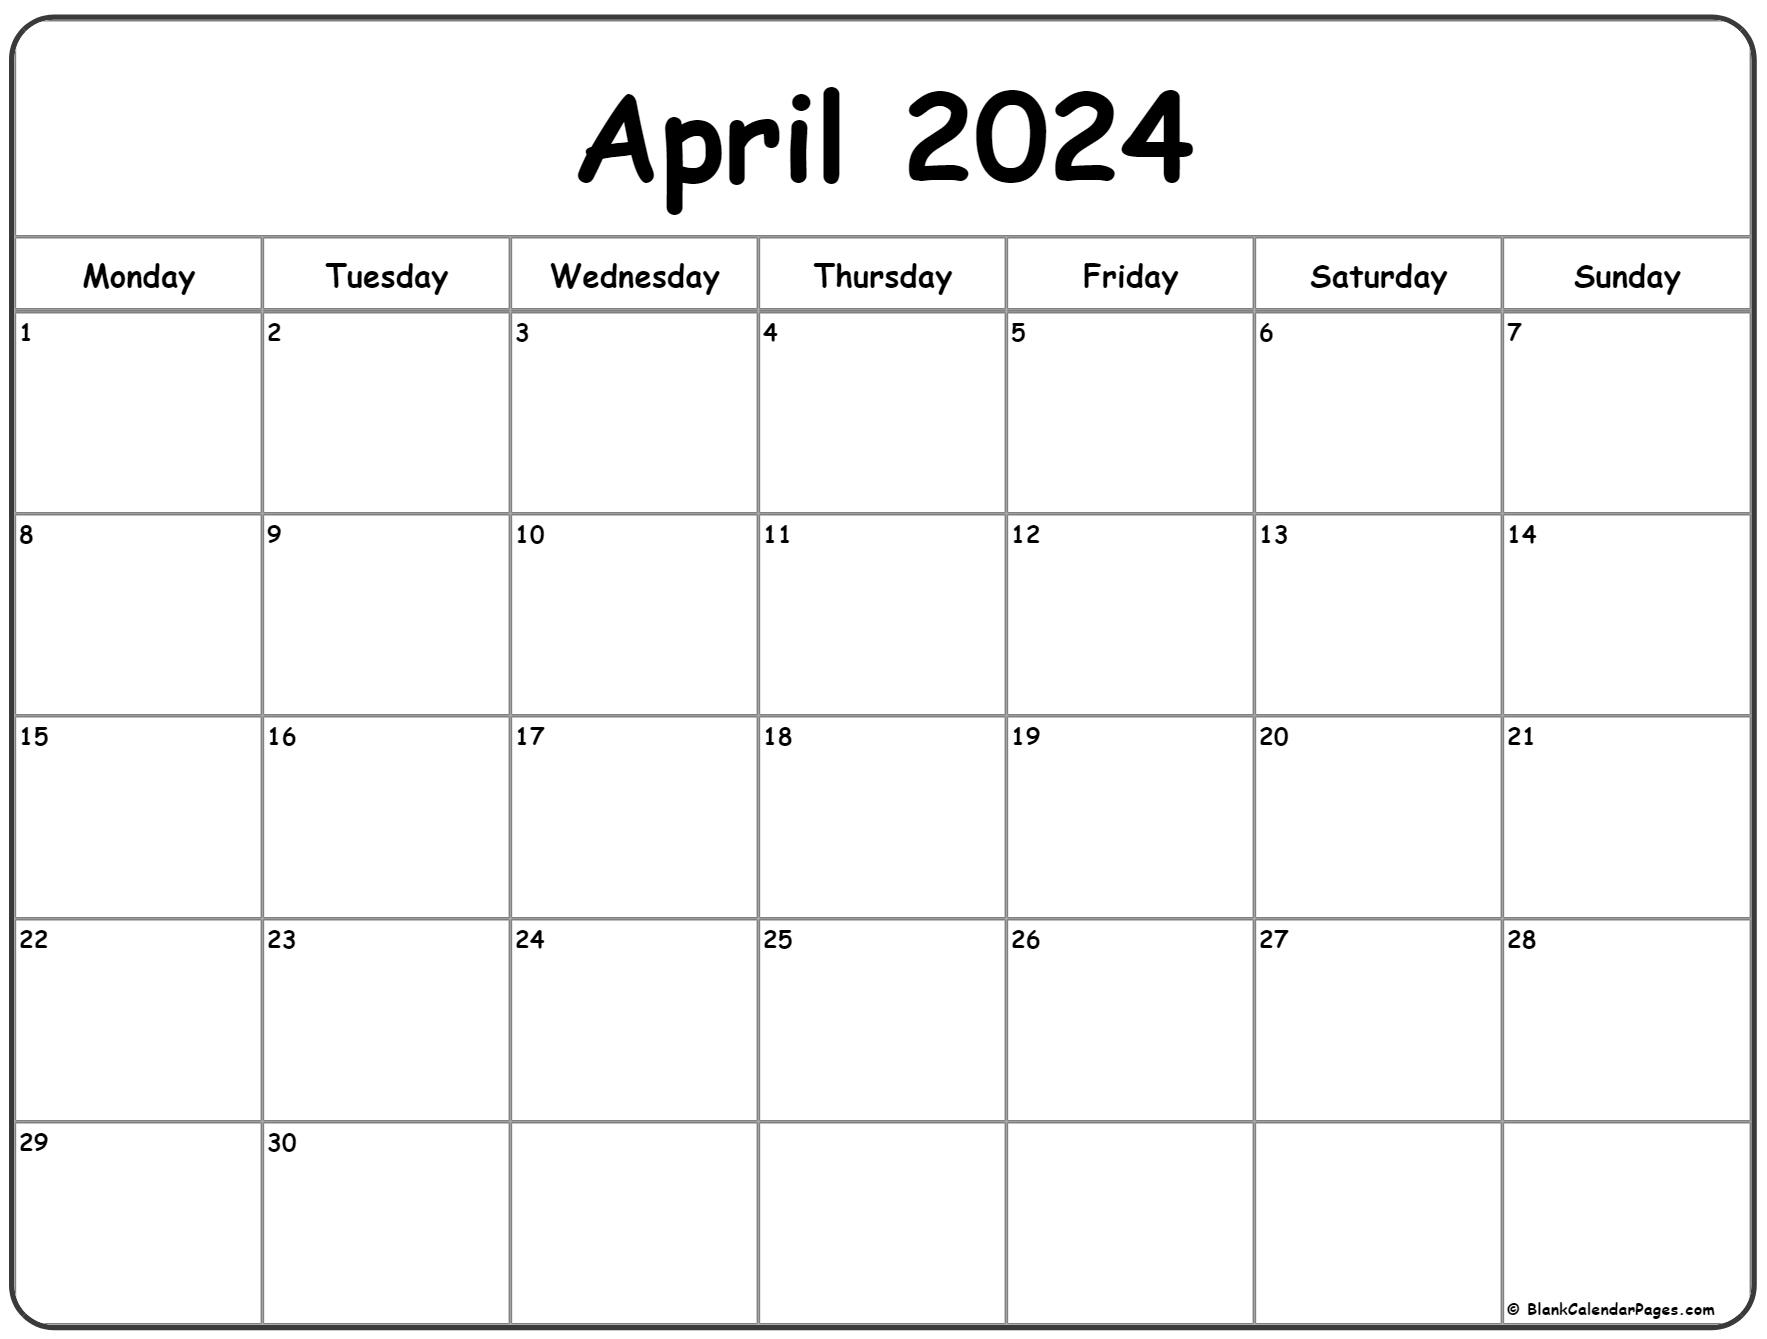 April 2024 Monday Calendar | Monday To Sunday for A Printable Calendar April 2024